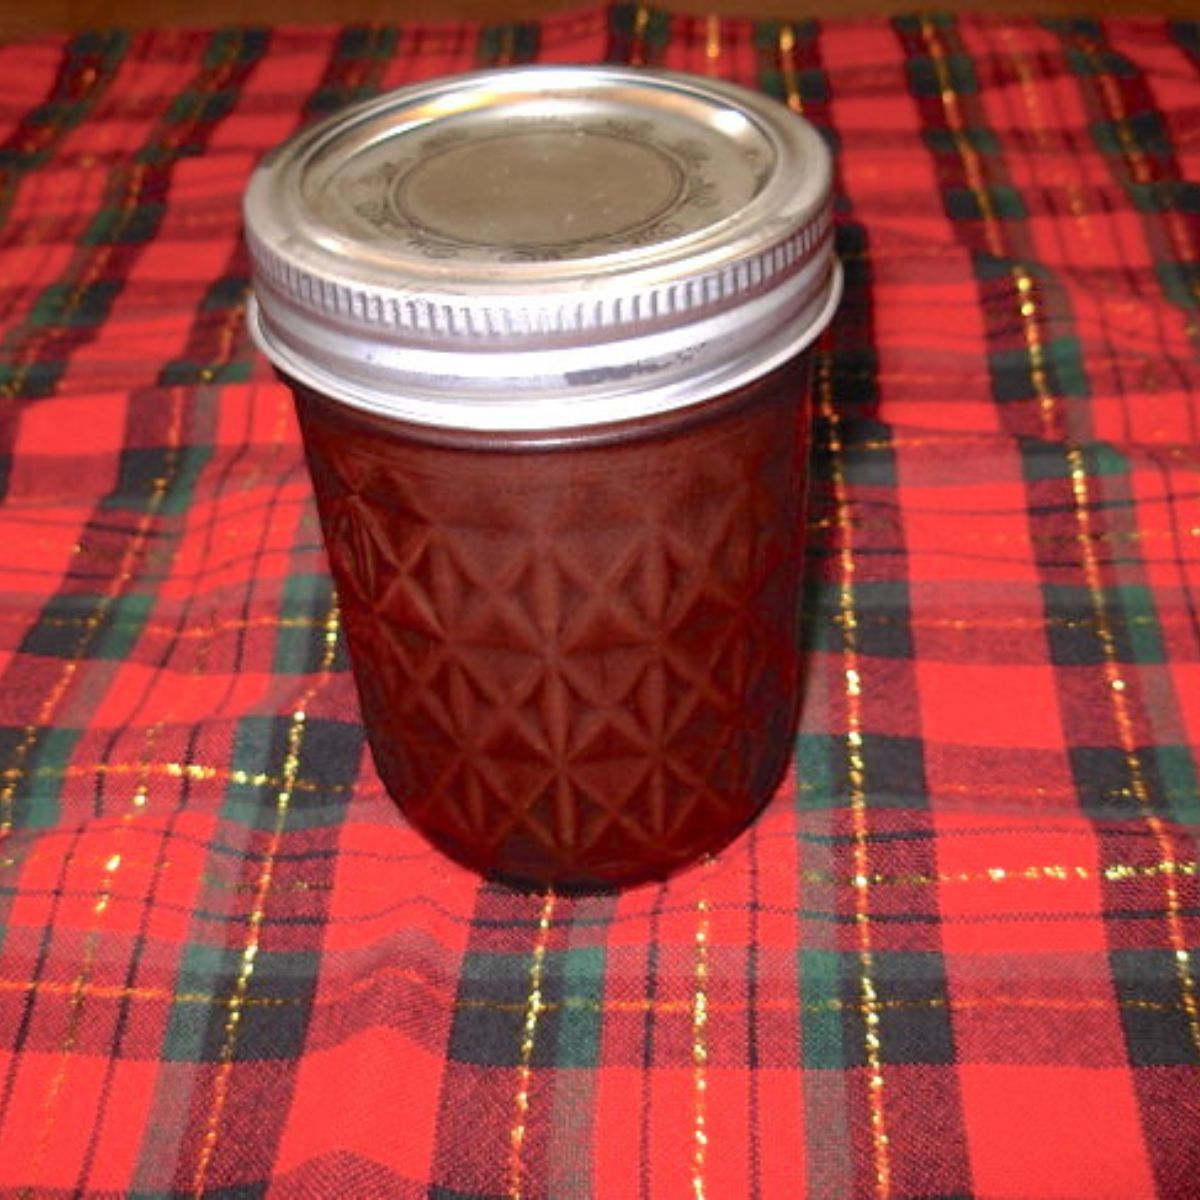 A jar of chocolate sauce sitting on pretty Christmas fabric